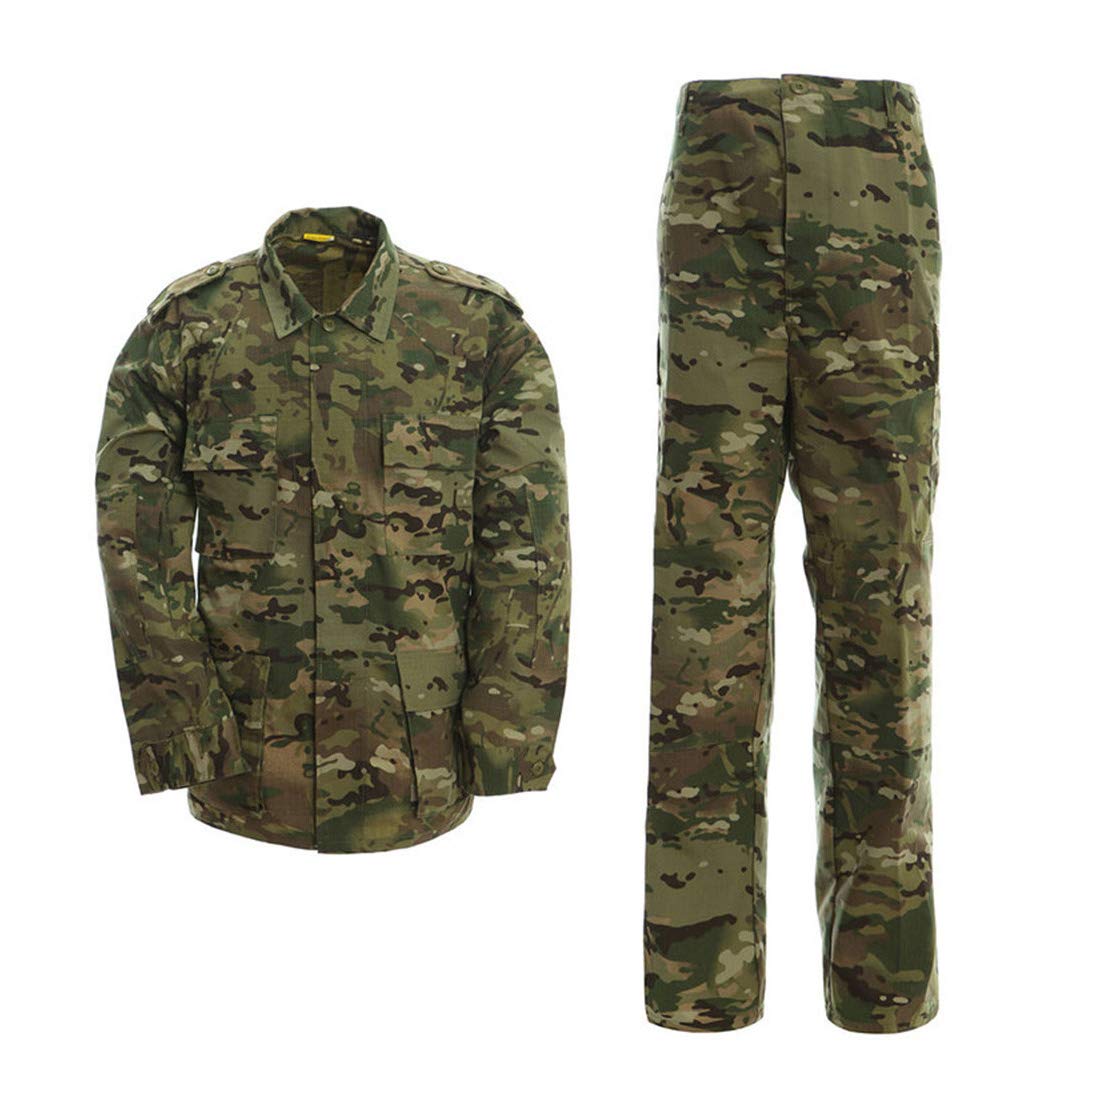 LANBAOSI Men Army Uniforms Military BDU Uniforms Set Tactical Clothing